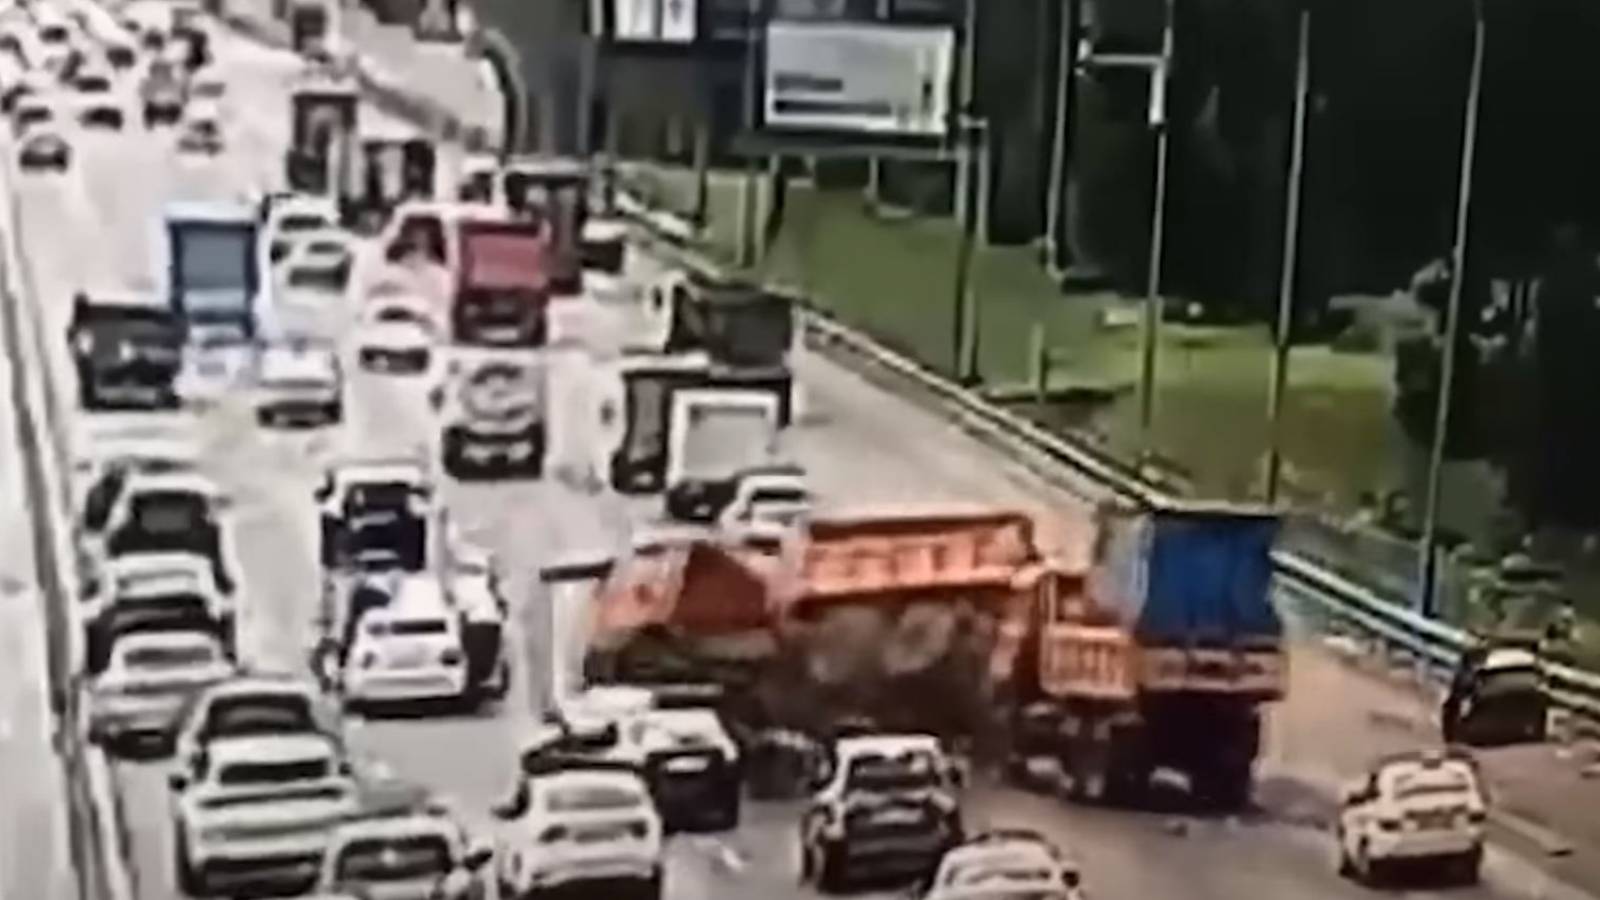 VIDEO Kedjeolycka orsakade hjulhoppade bilar